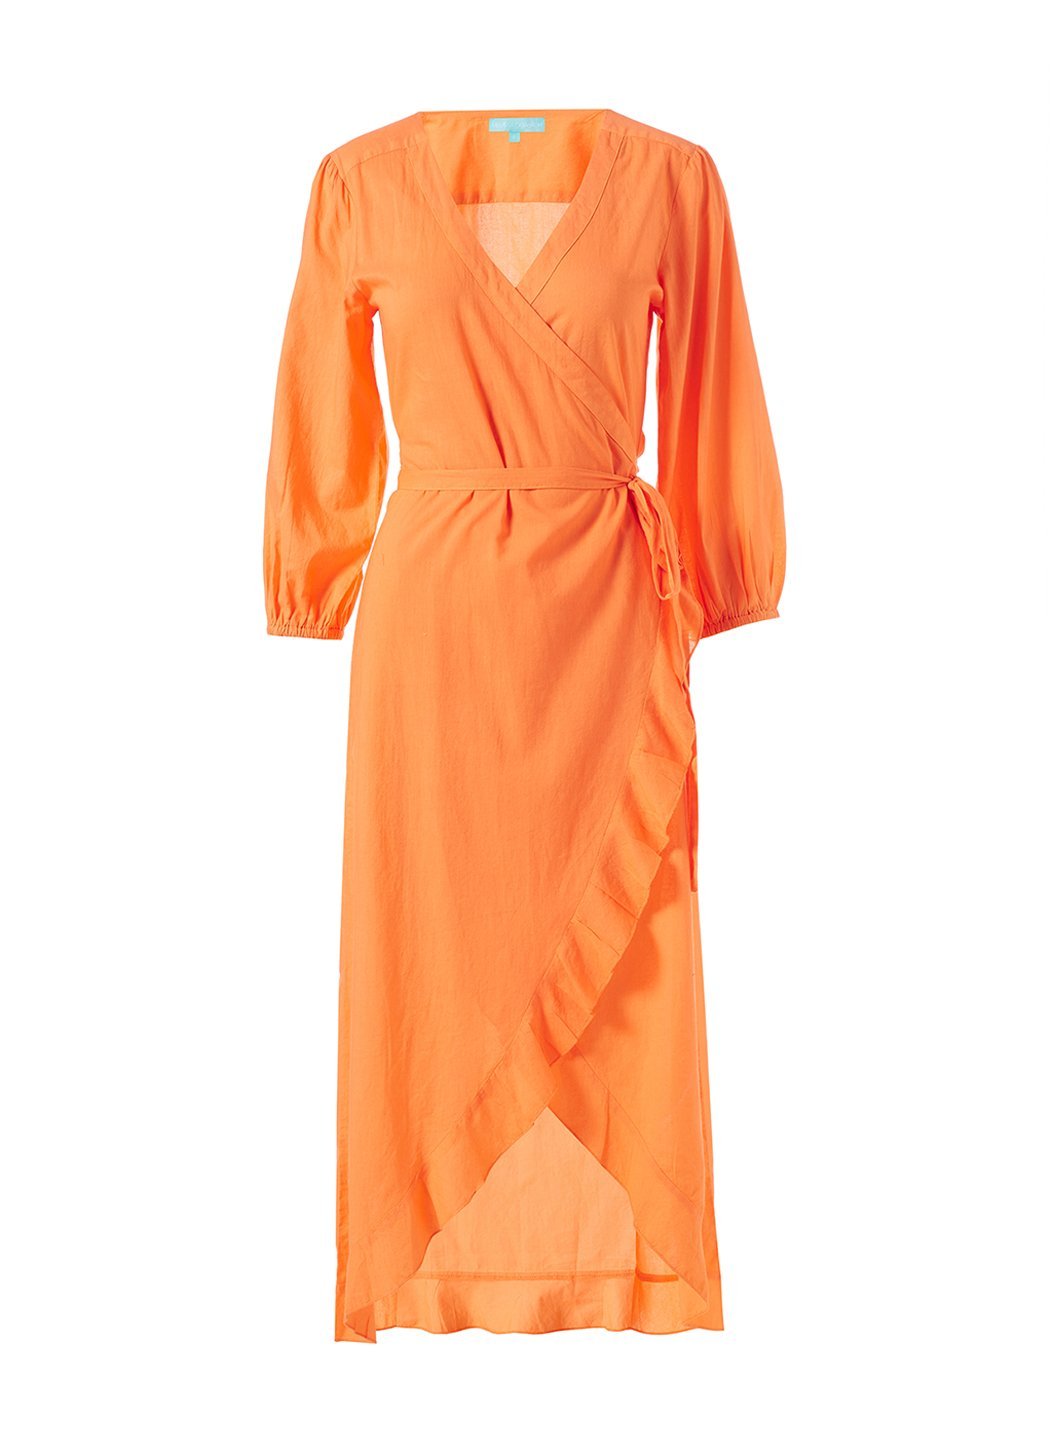 Melissa Odabash Beach Dresses For Women | Official Website